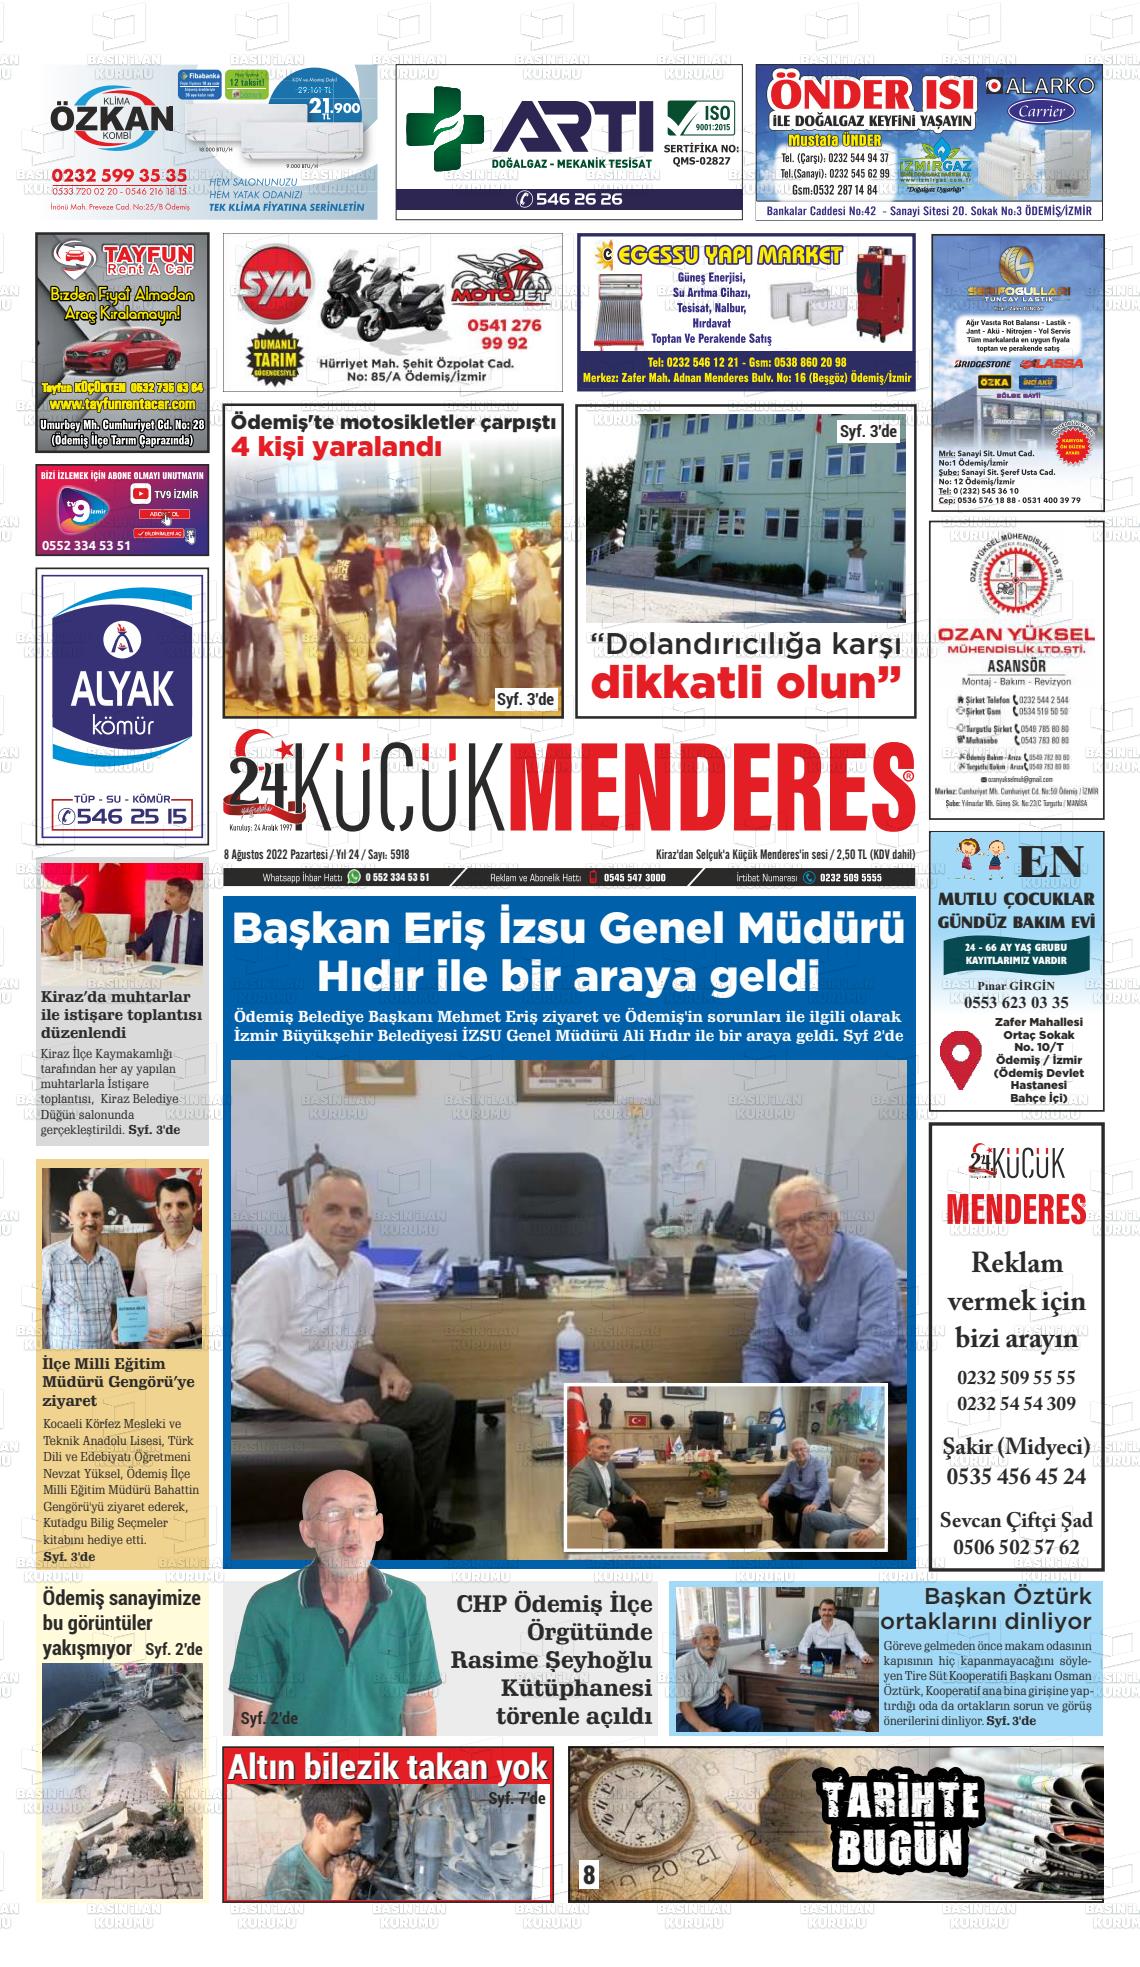 08 Ağustos 2022 Küçük Menderes Gazete Manşeti